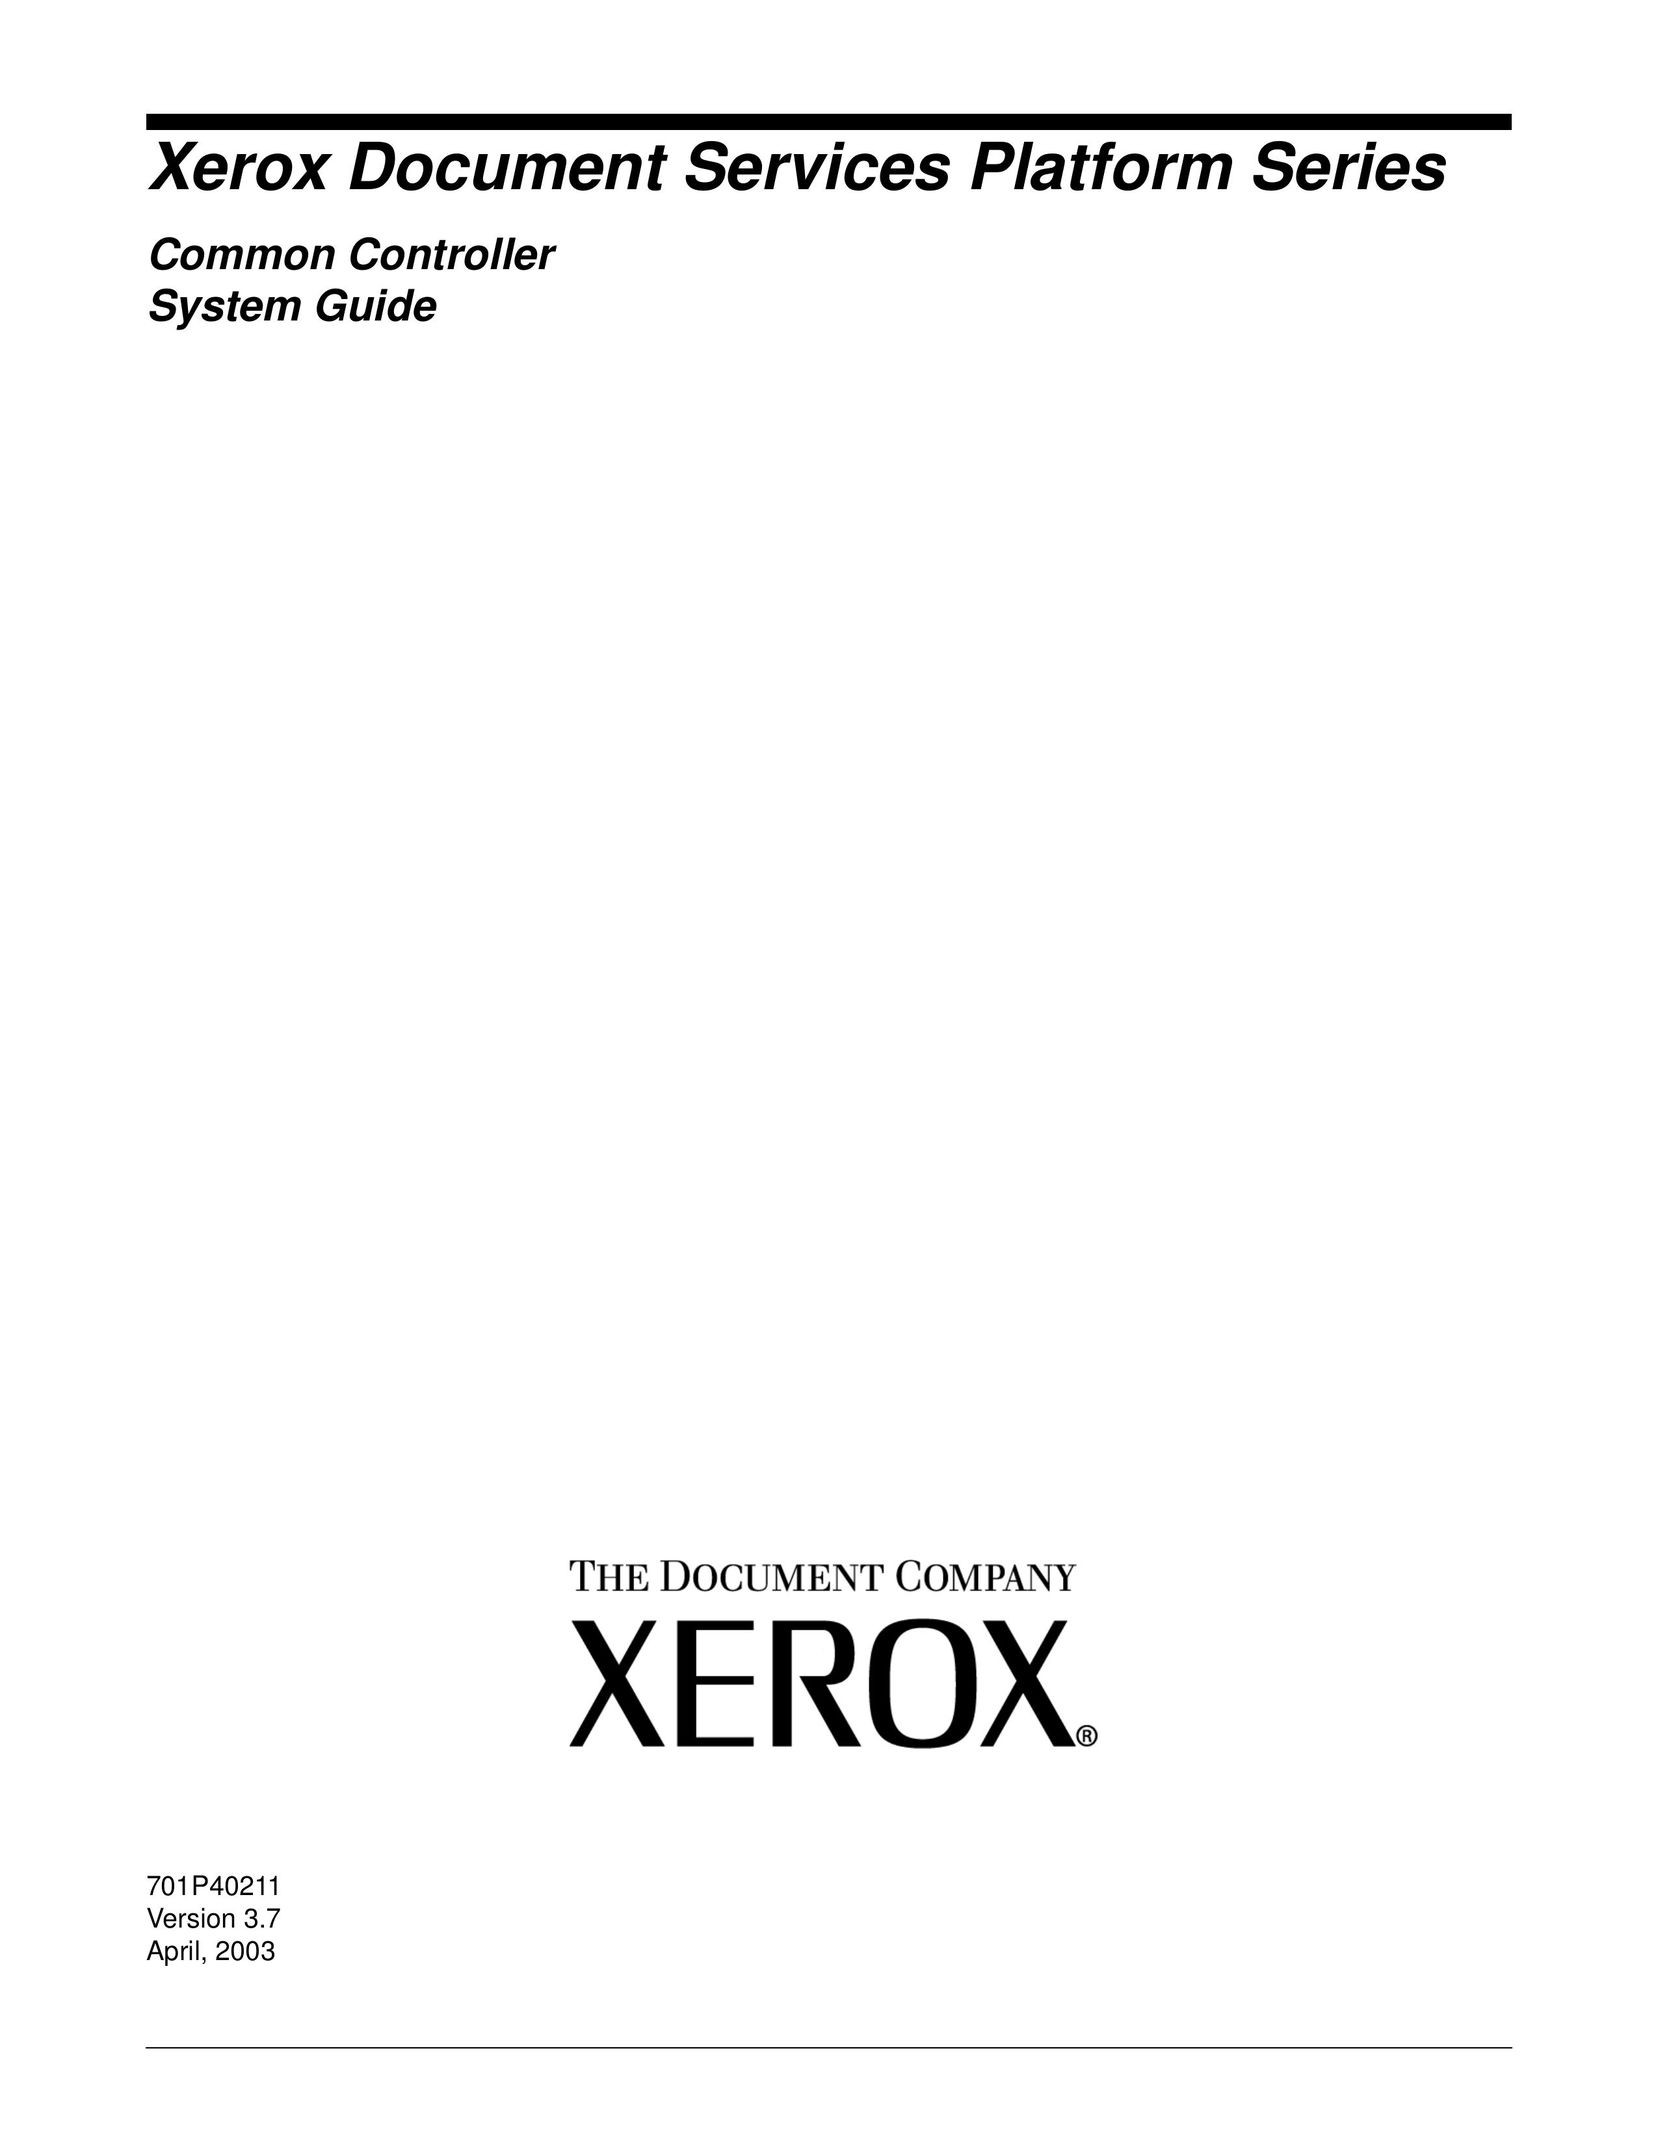 Xerox 701P40211 Copier User Manual